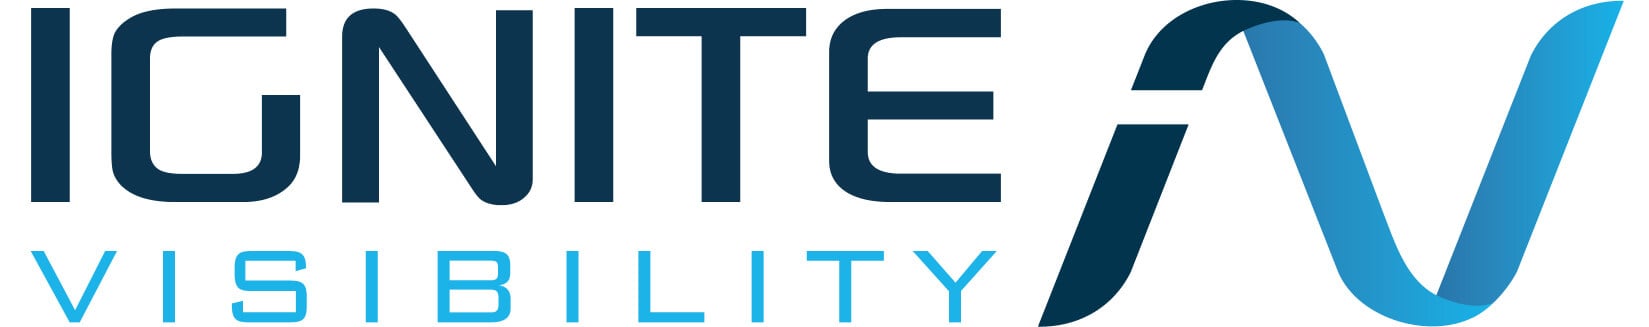 Best Reputation Management Firm Logo: Ignite Visibility